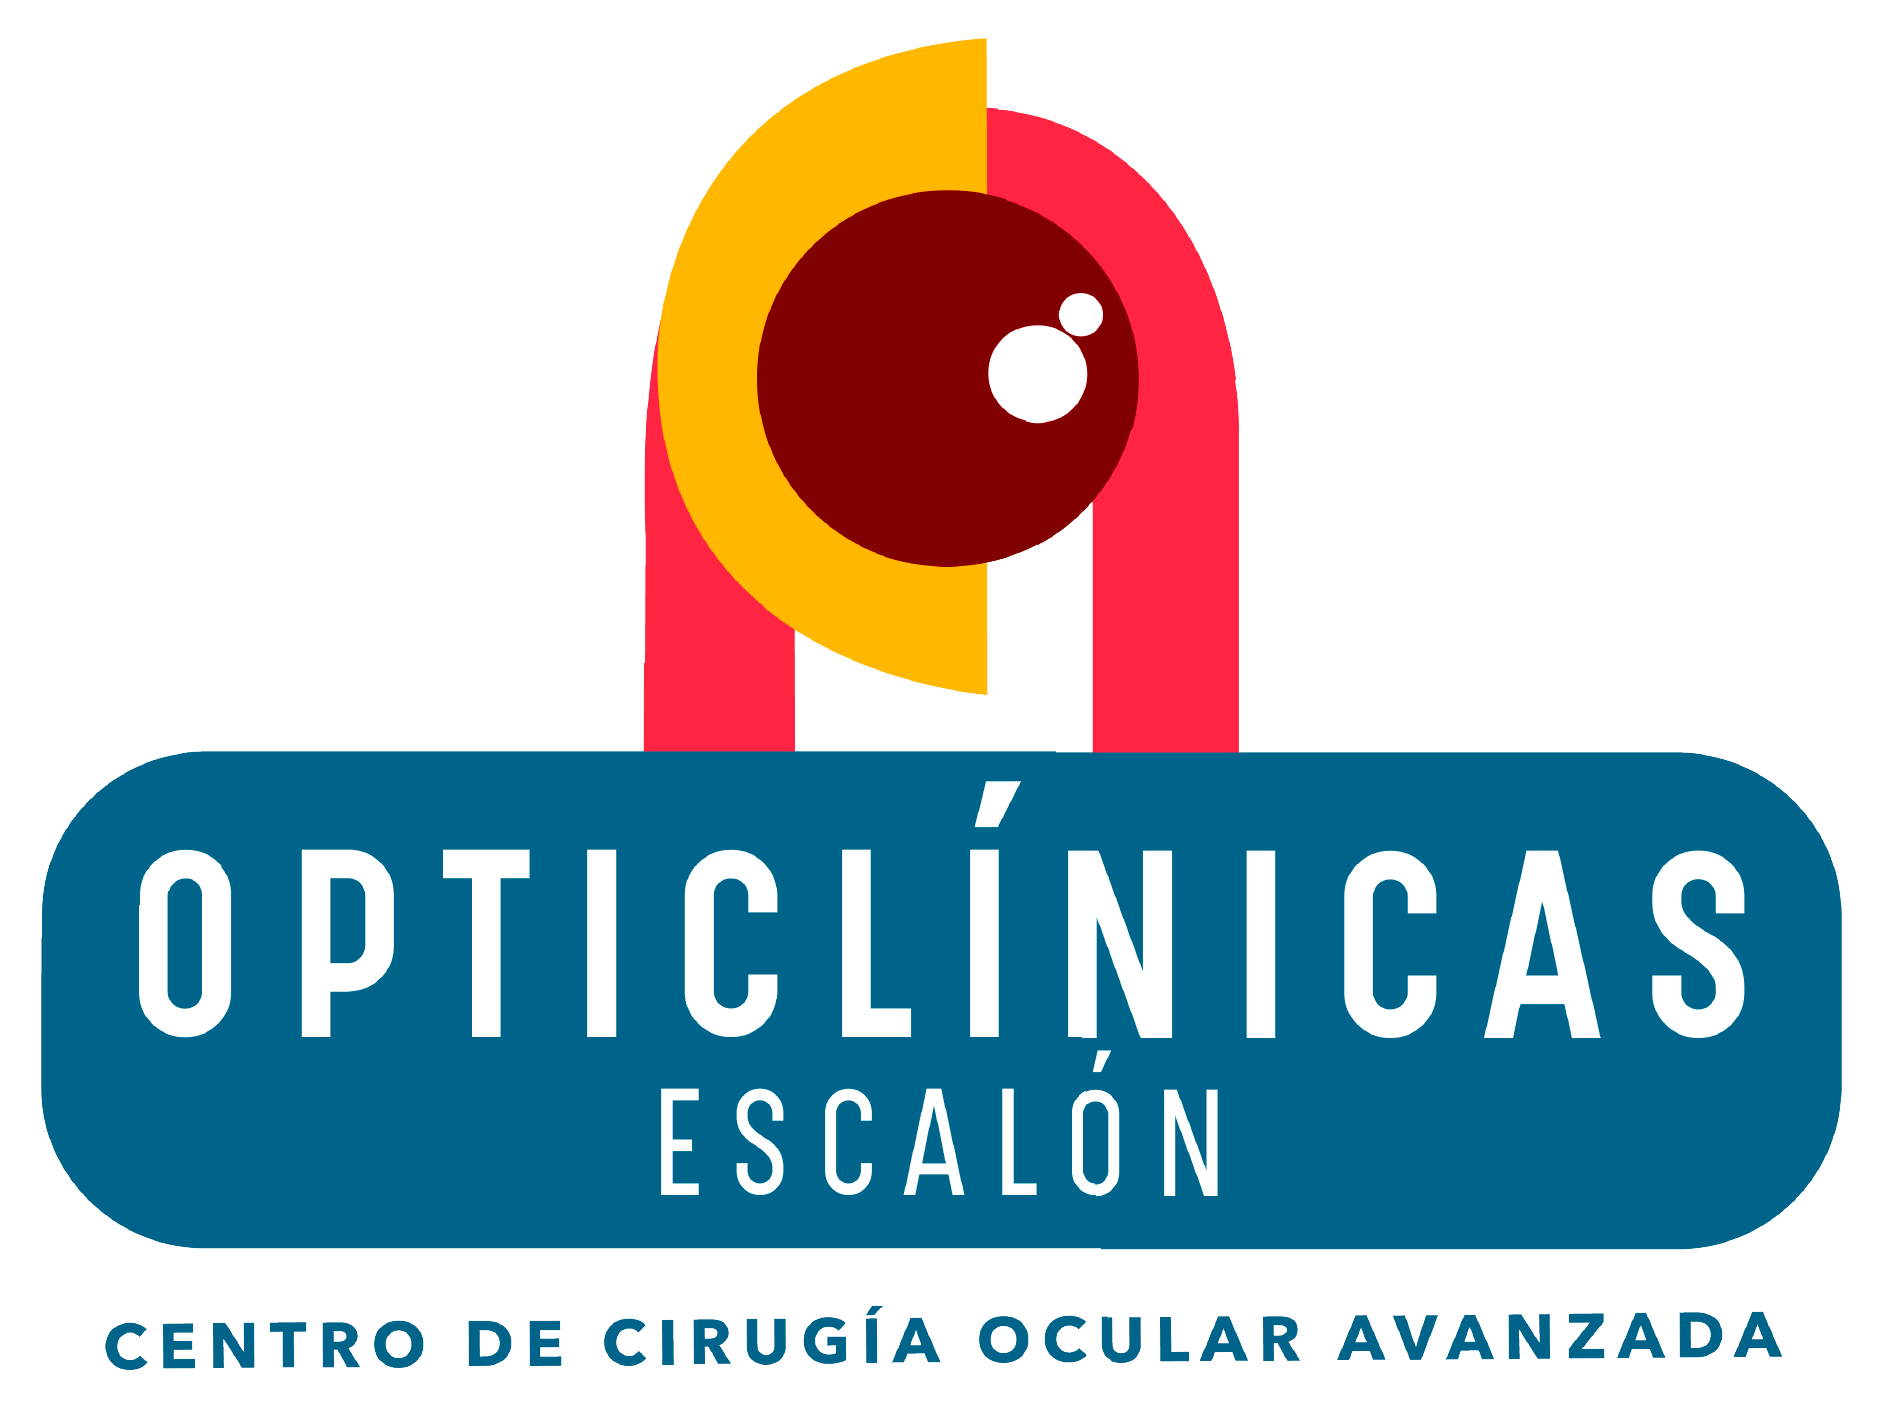 Opticlinicas